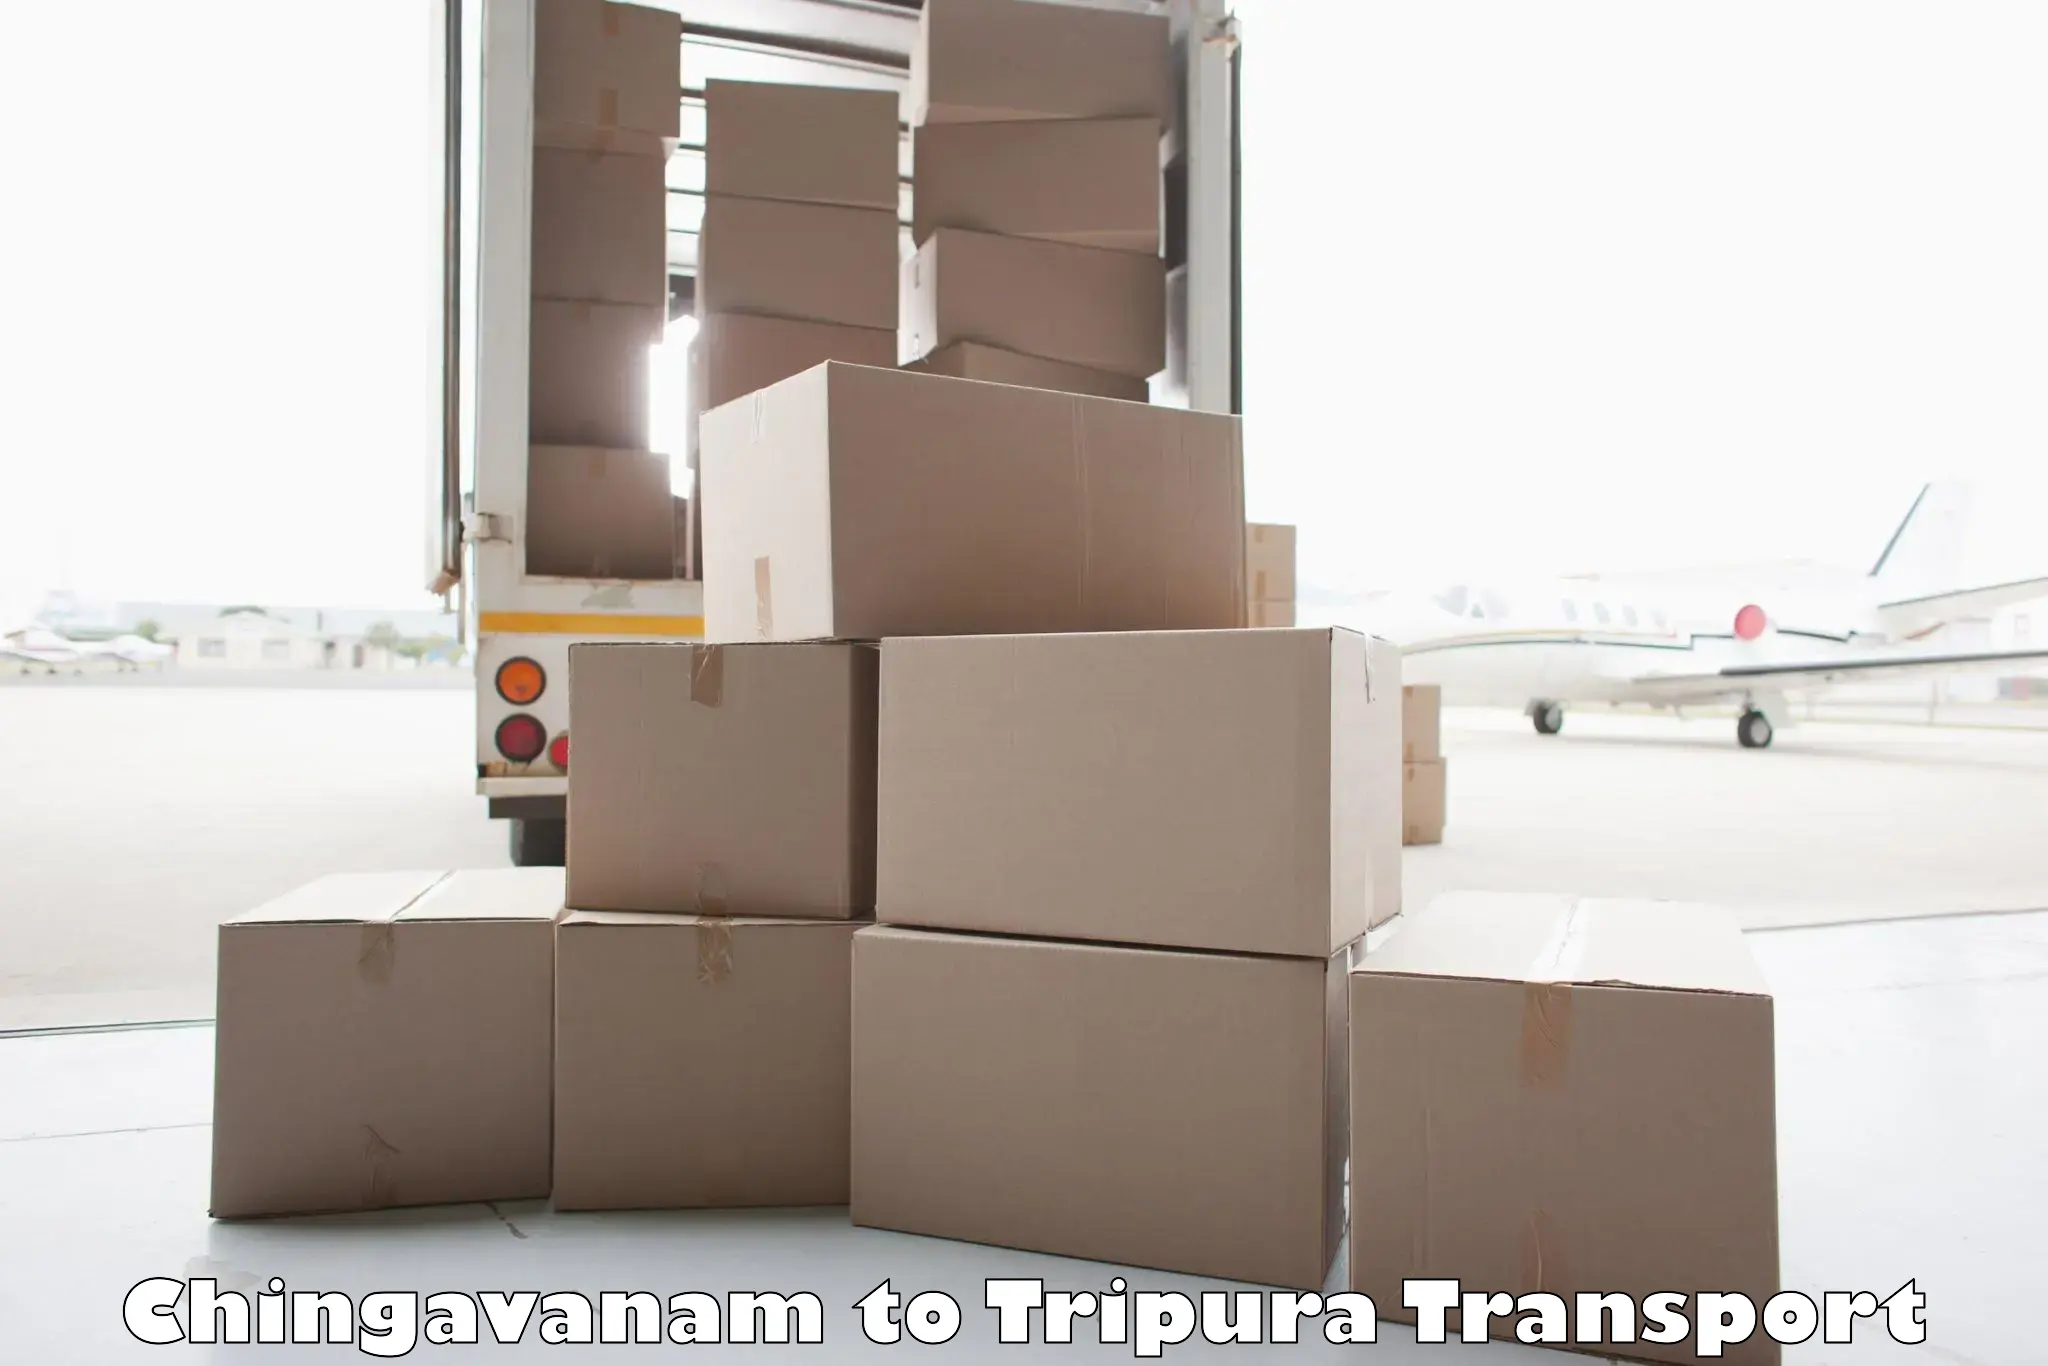 Nationwide transport services Chingavanam to Udaipur Tripura